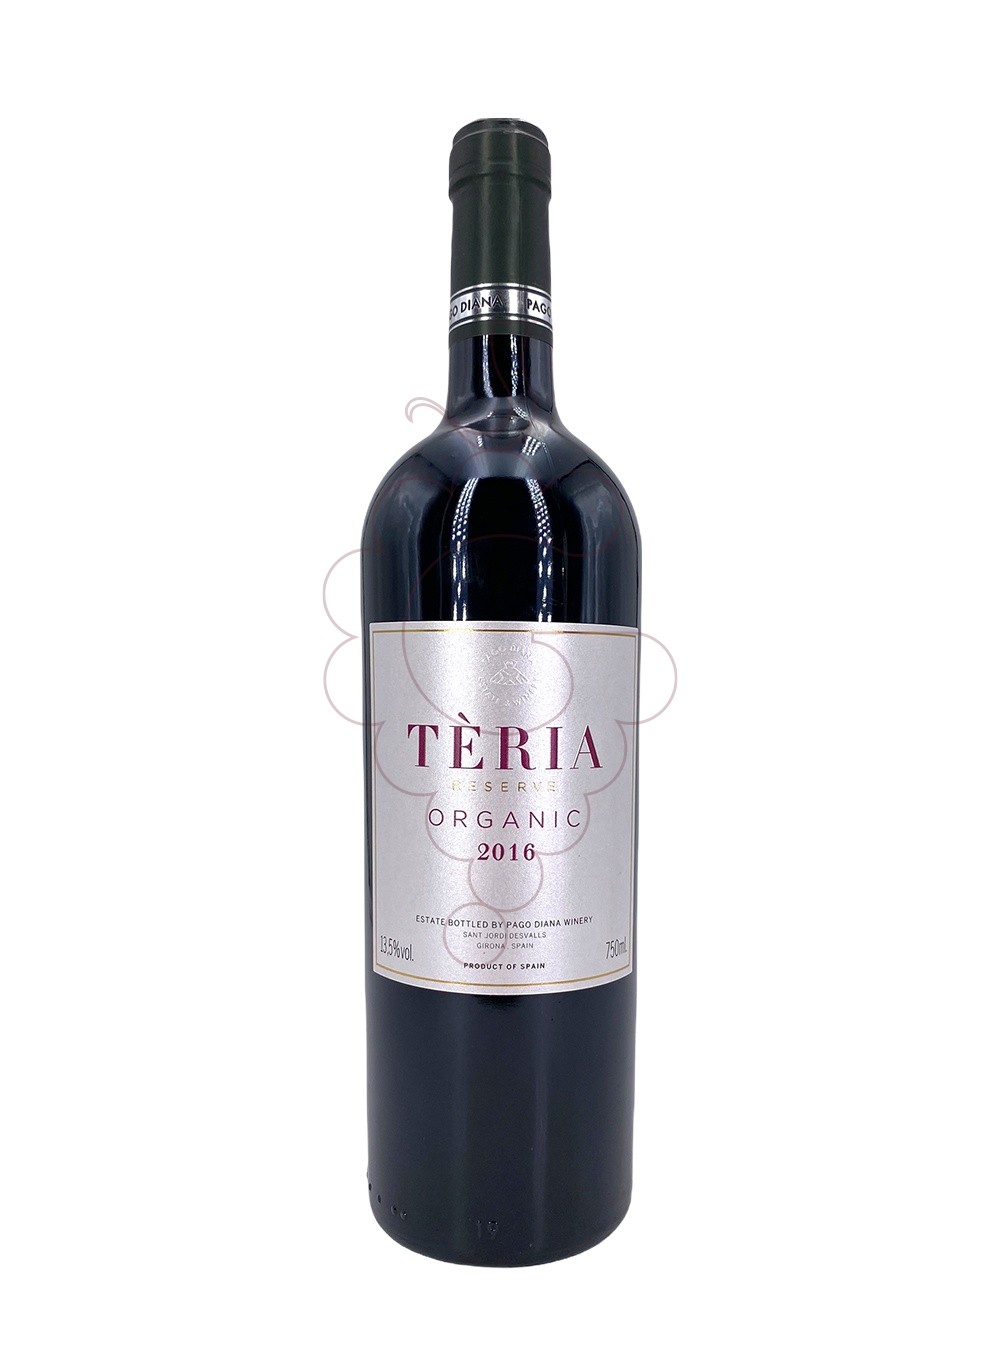 Photo Teria reserva 2016 organic red wine